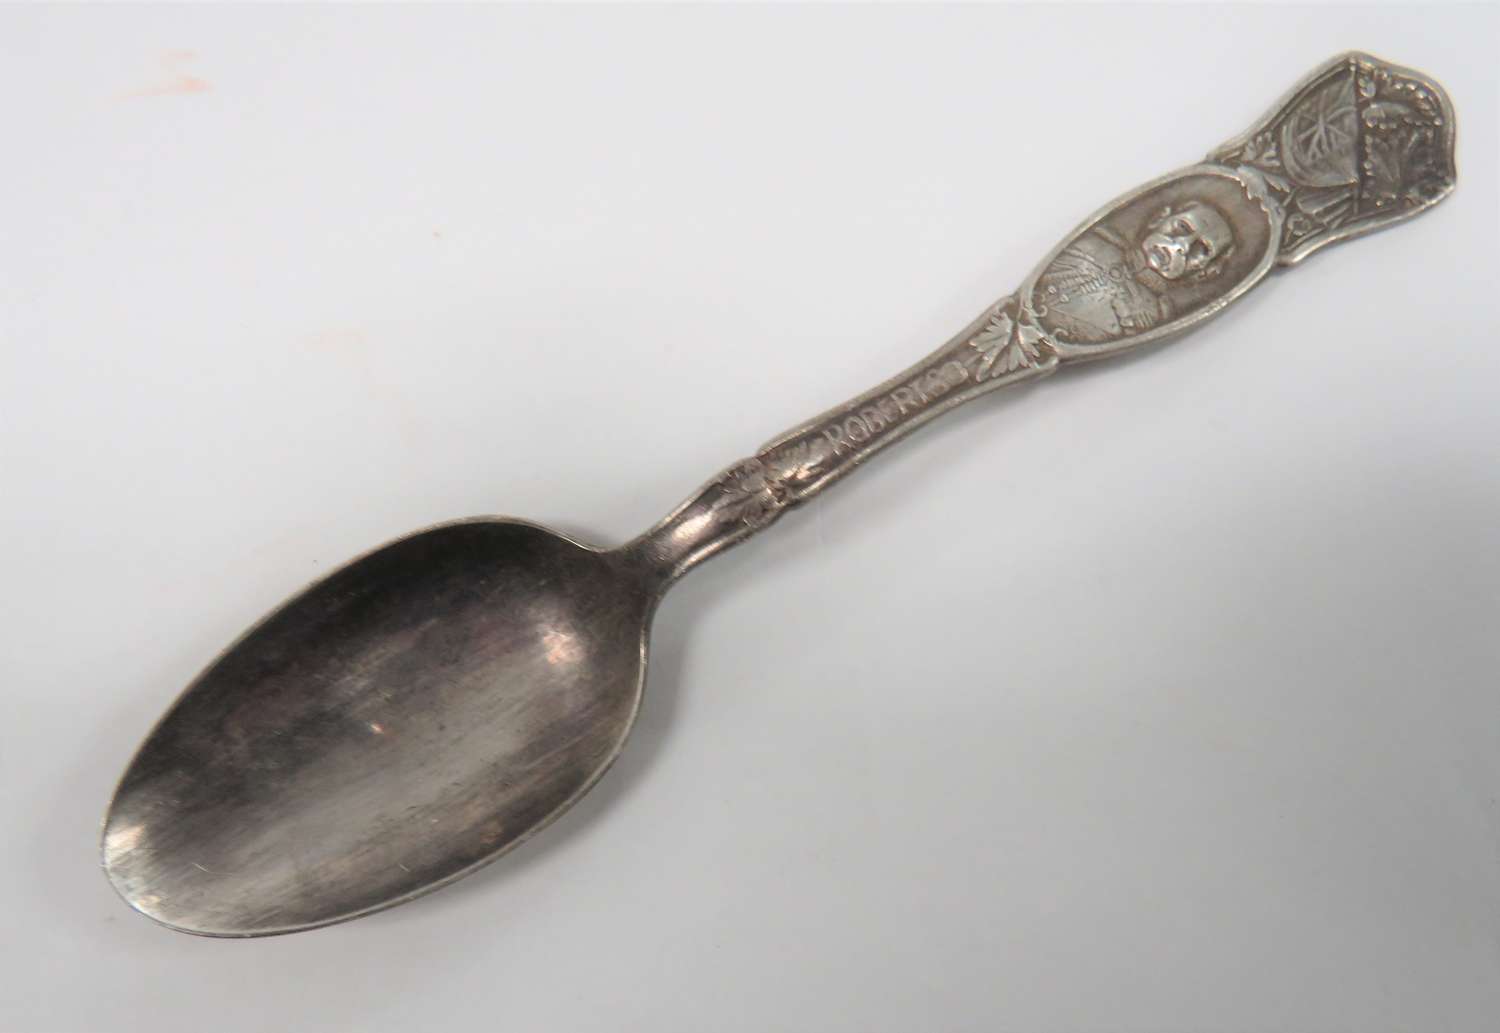 Boer War Lord Roberts Commemorative Spoon